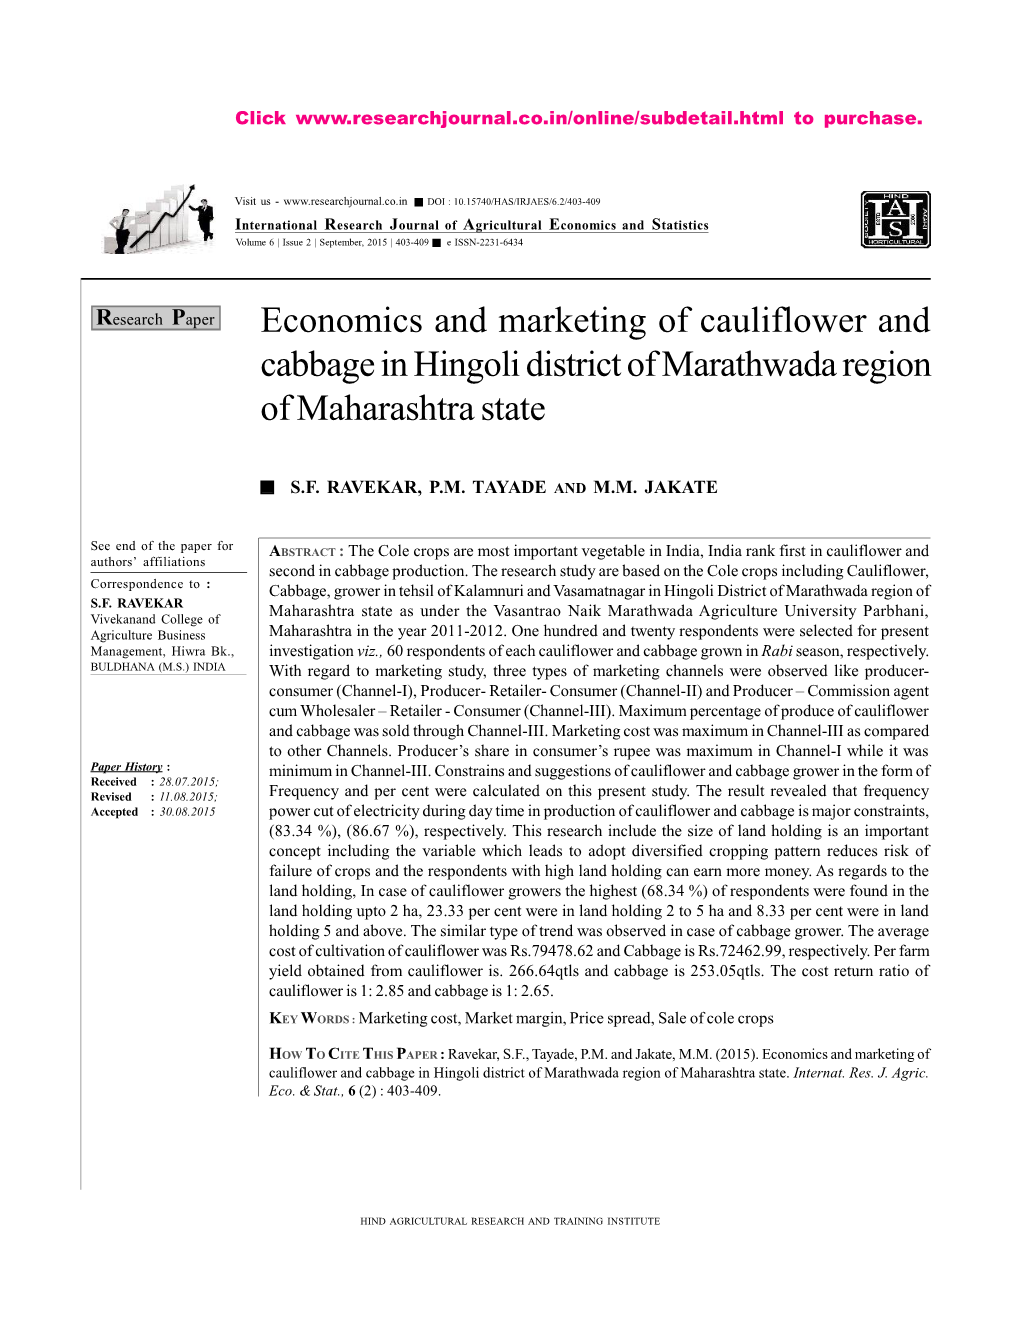 Economics and Marketing of Cauliflower and Cabbage in Hingoli District of Marathwada Region of Maharashtra State